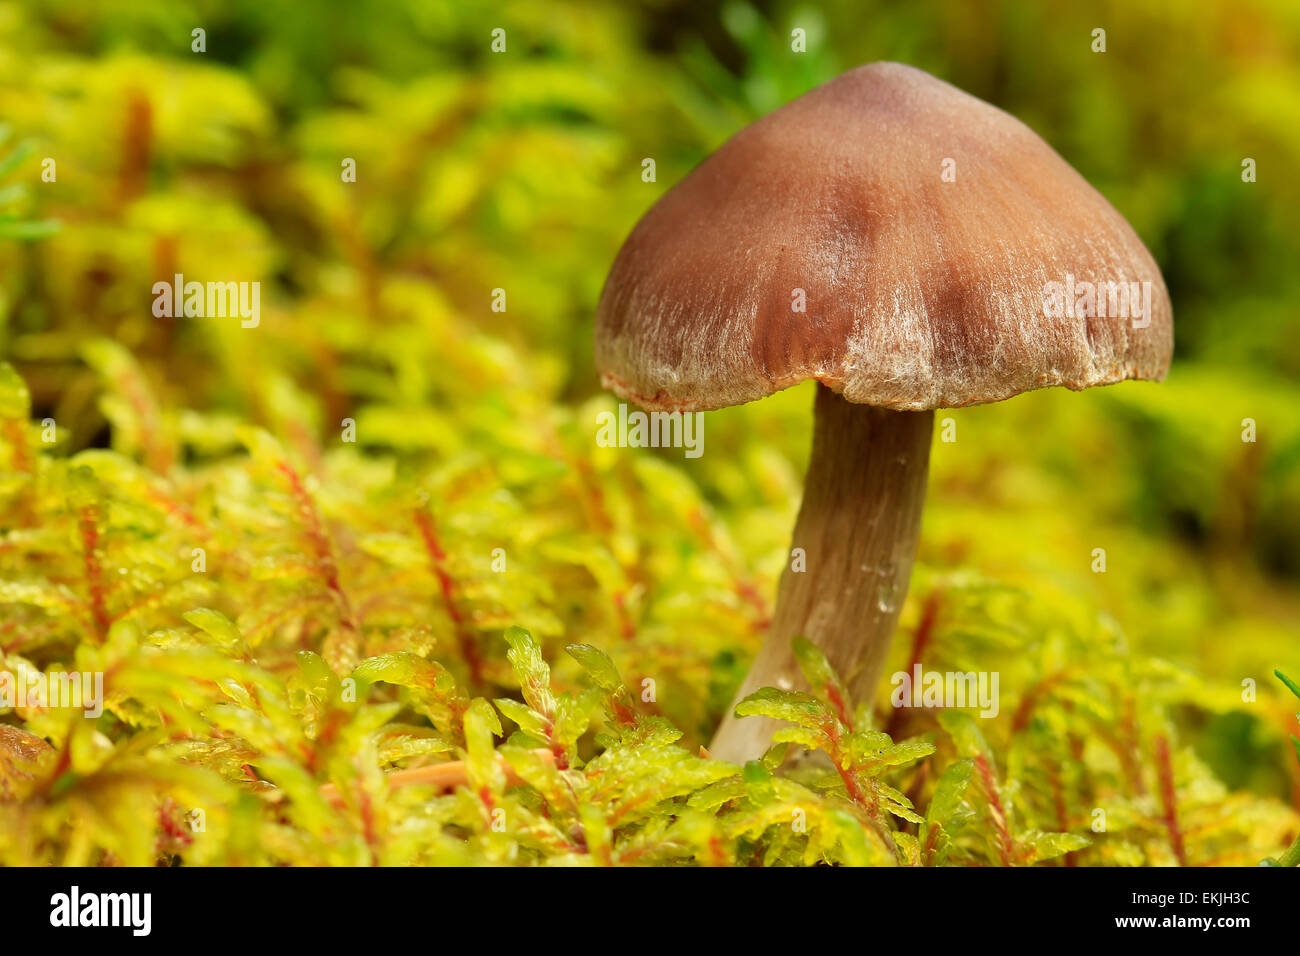 Small mushroom, Yoho National Park, British Columbia, Canada Stock Photo